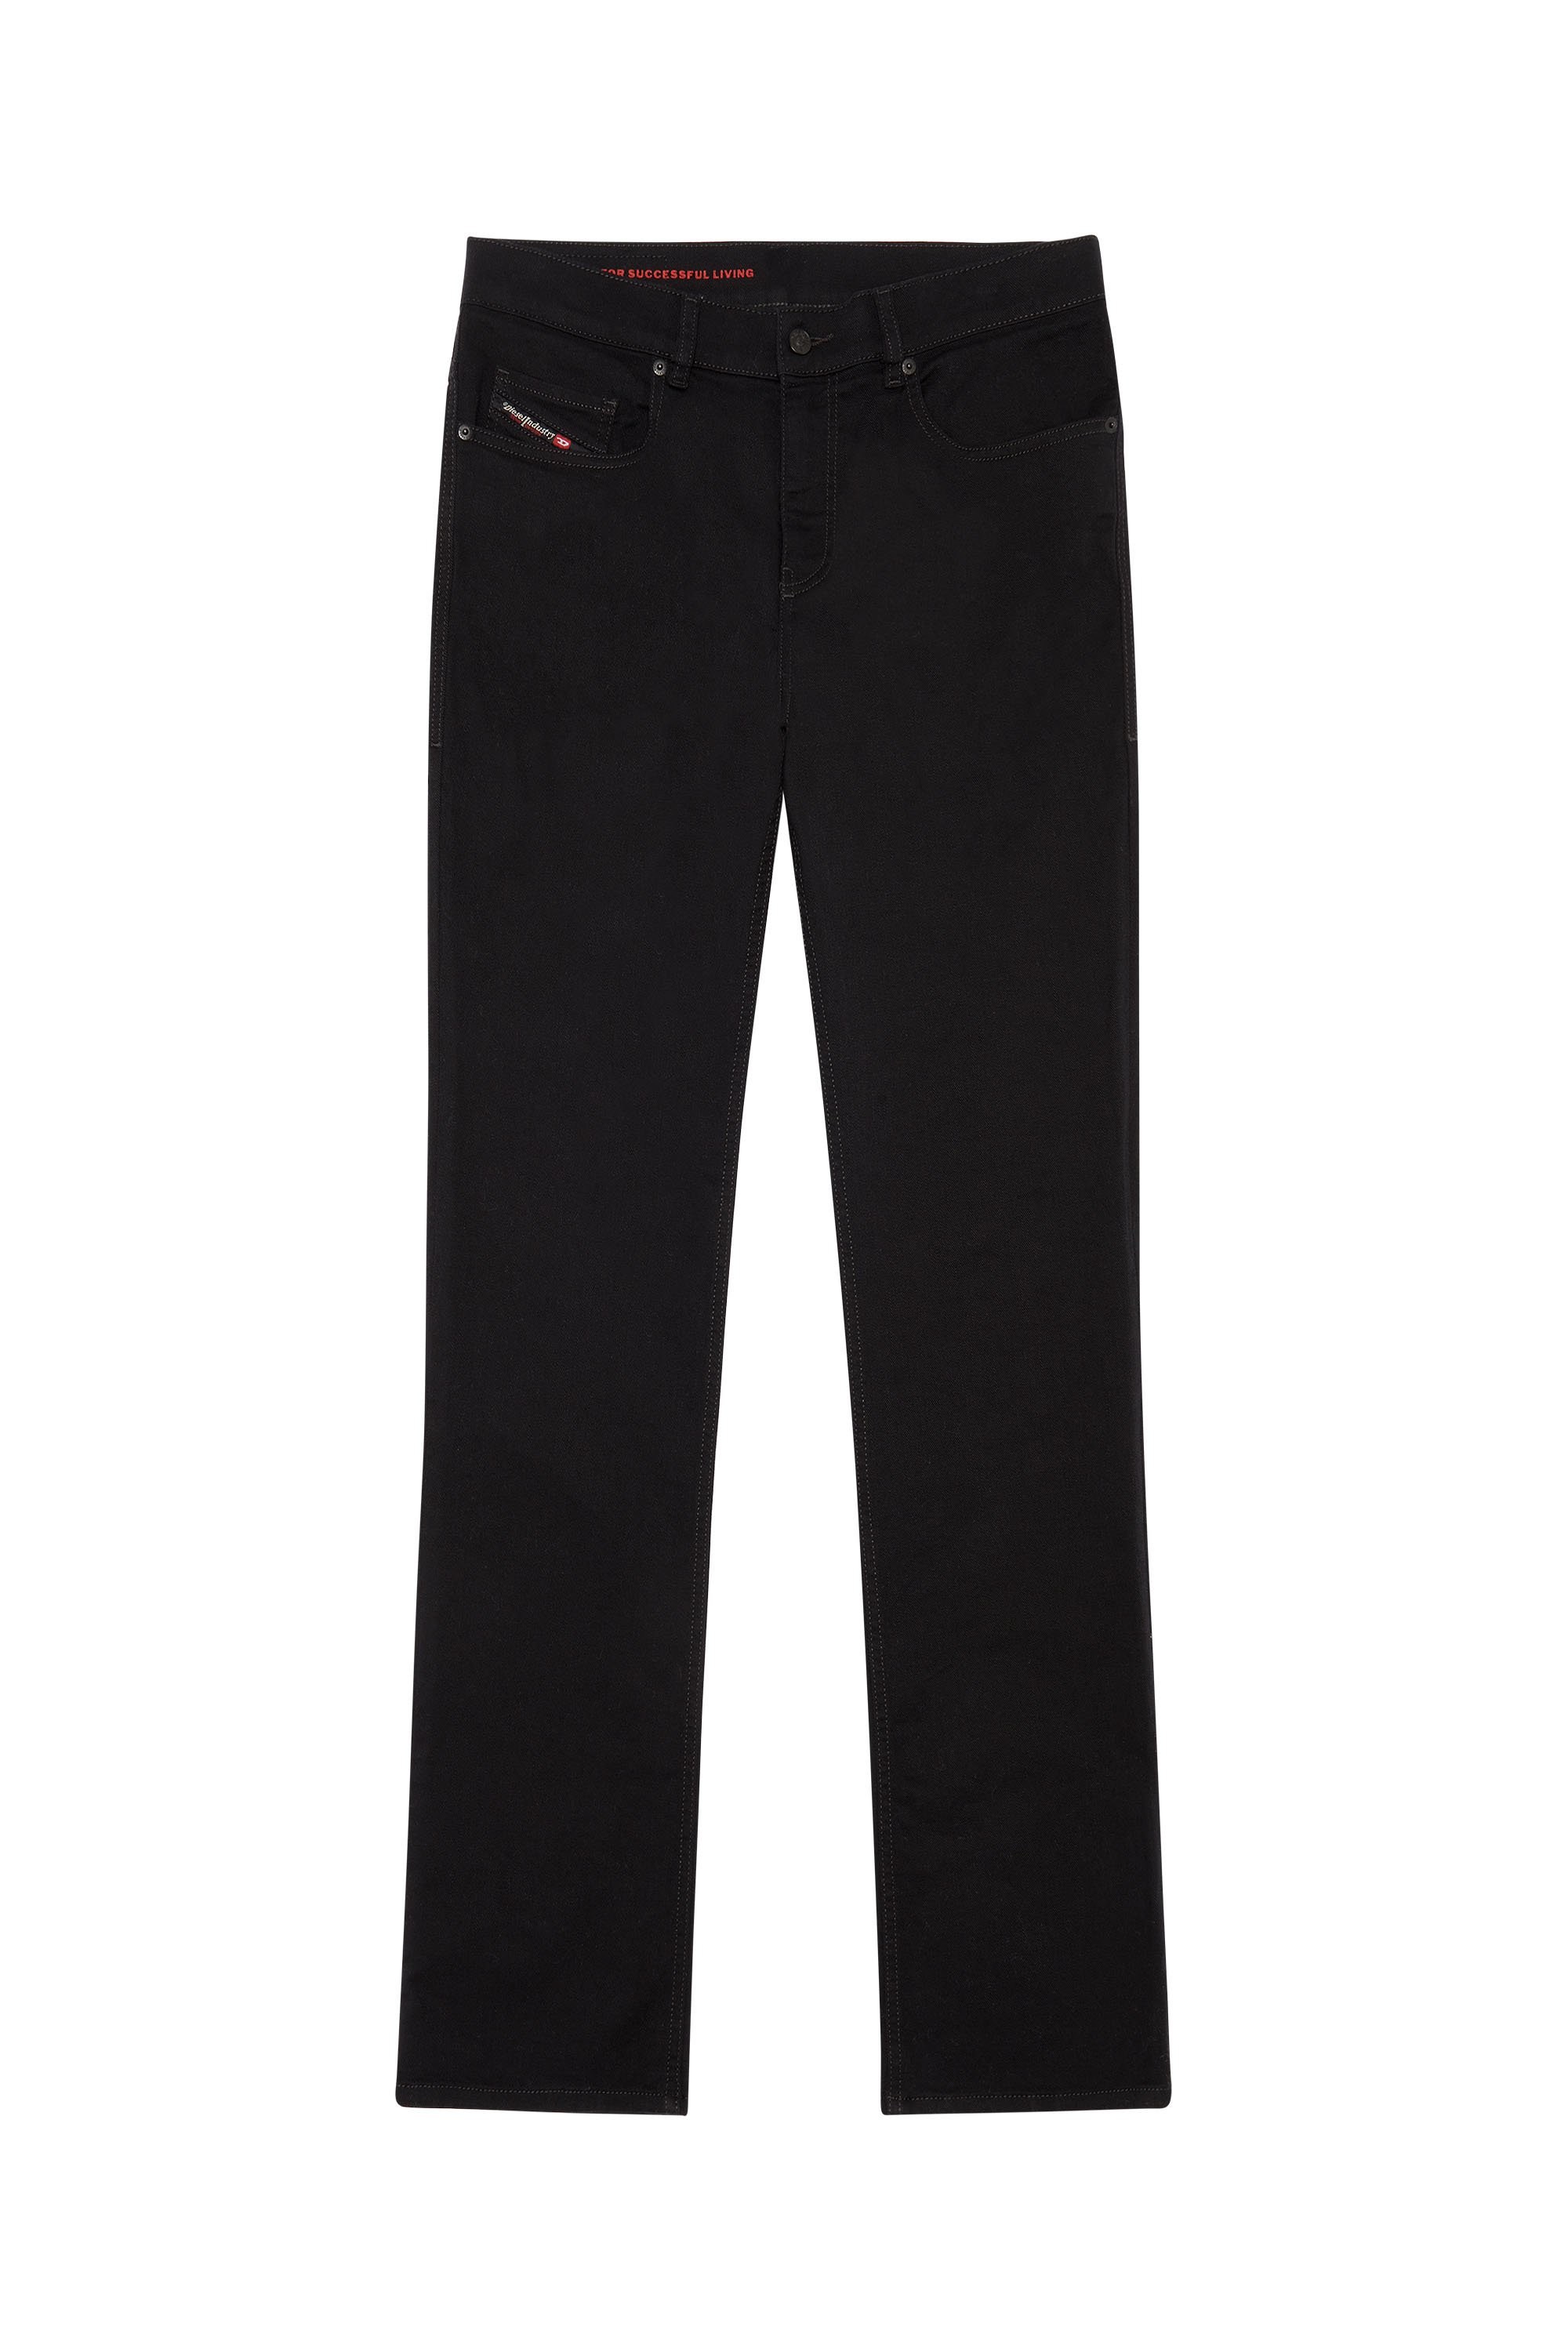 2021 069YP Bootcut Jeans, Black/Dark grey - Jeans